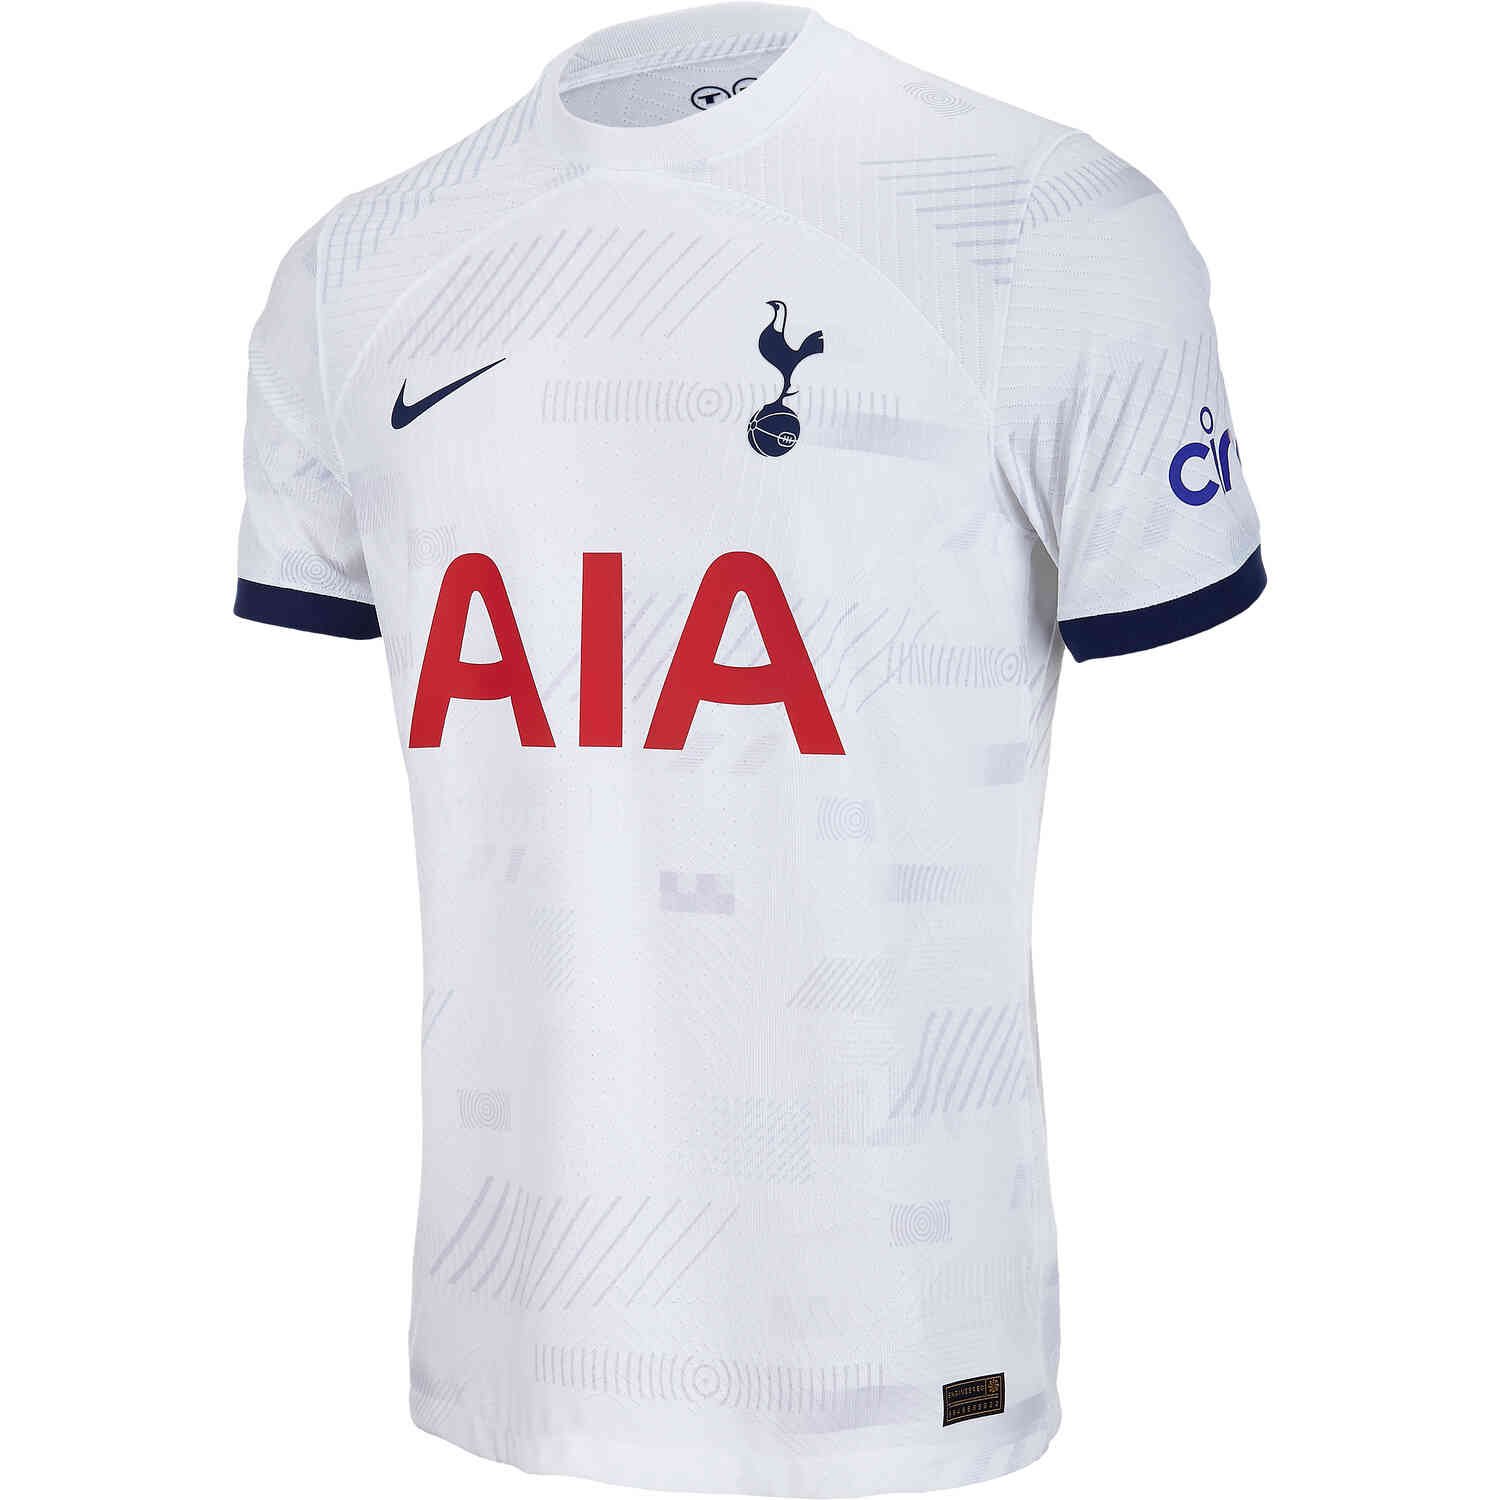 Nike Football Tottenham Hotspur jersey in pink